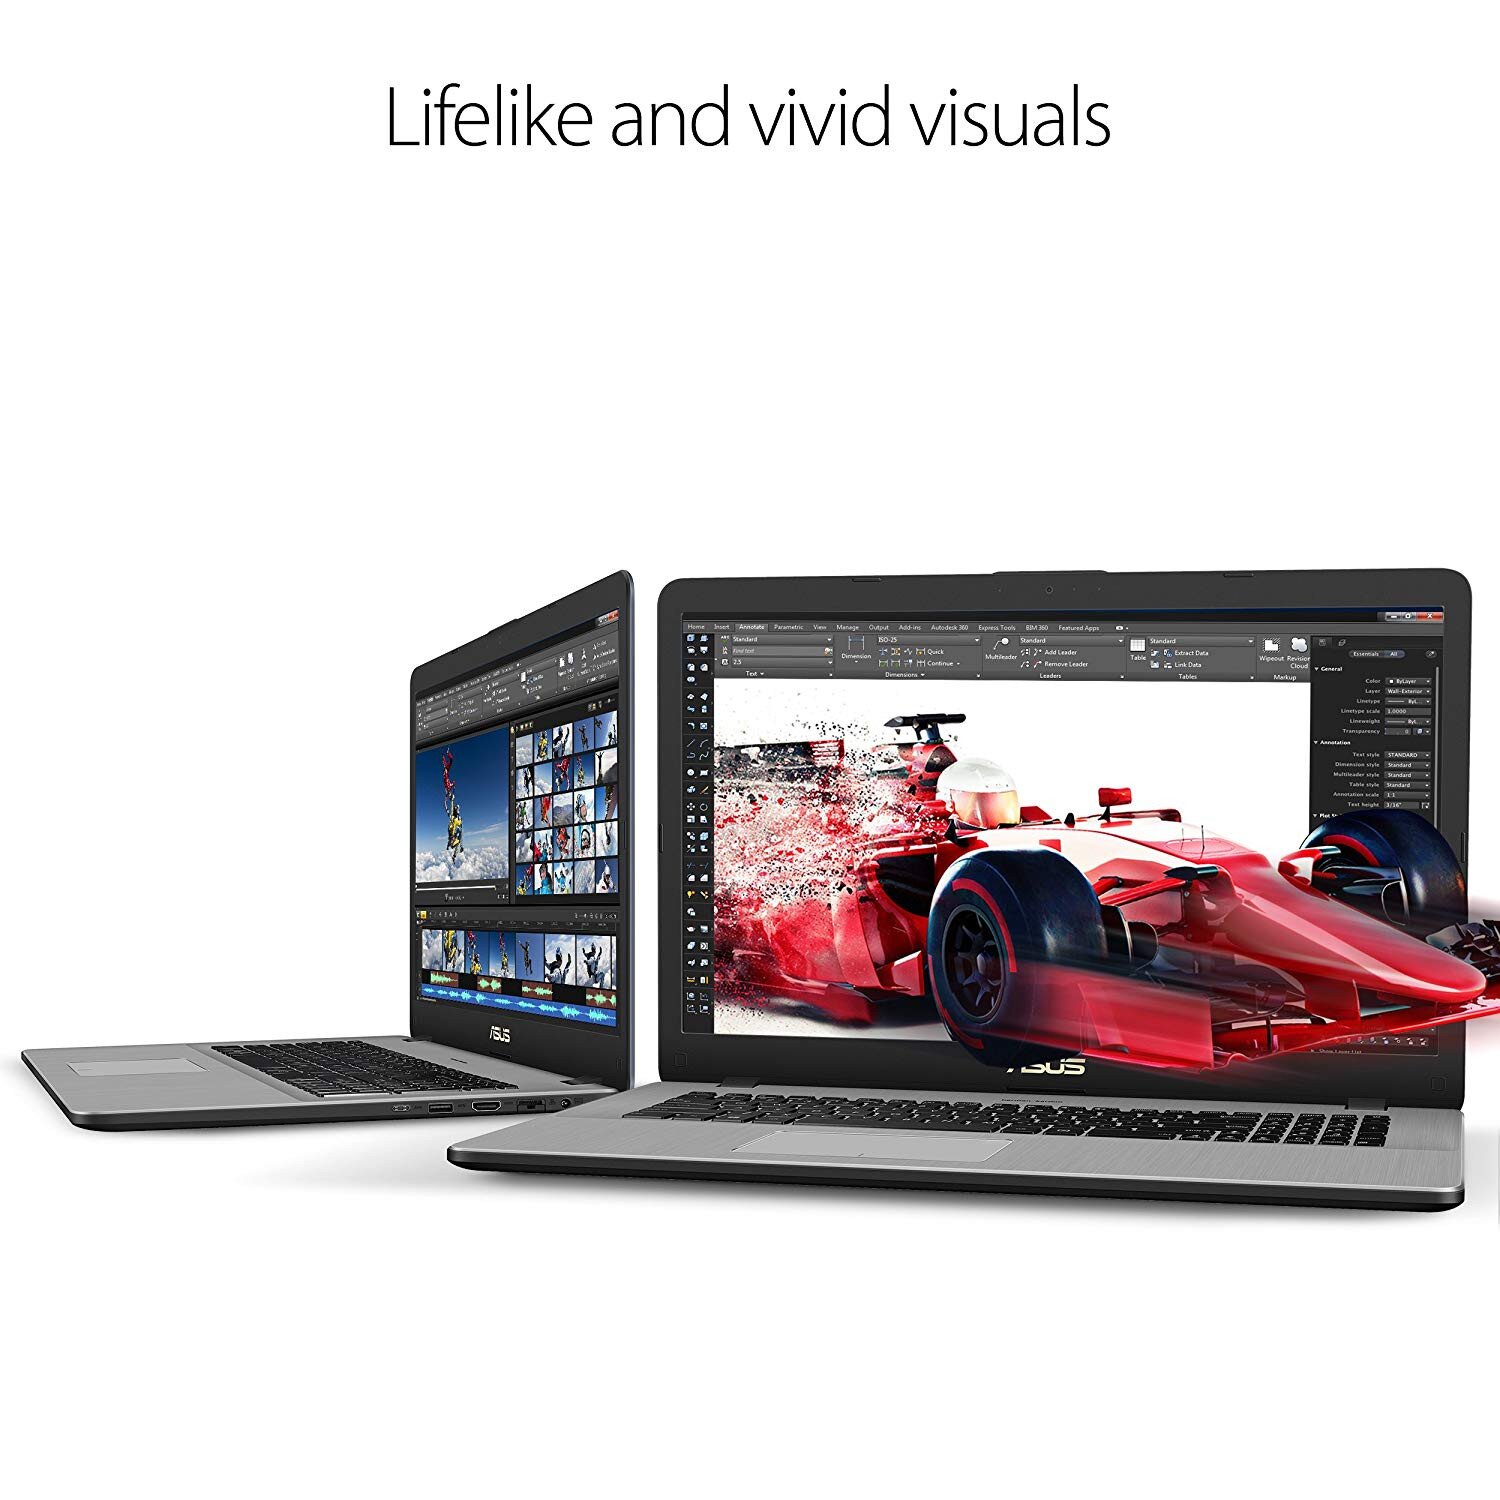 Buy Asus Vivobook Pro 17 N705ud Eh76 Fhd Thin And Light Laptop I7 8550u Gtx 1050 16gb Ram